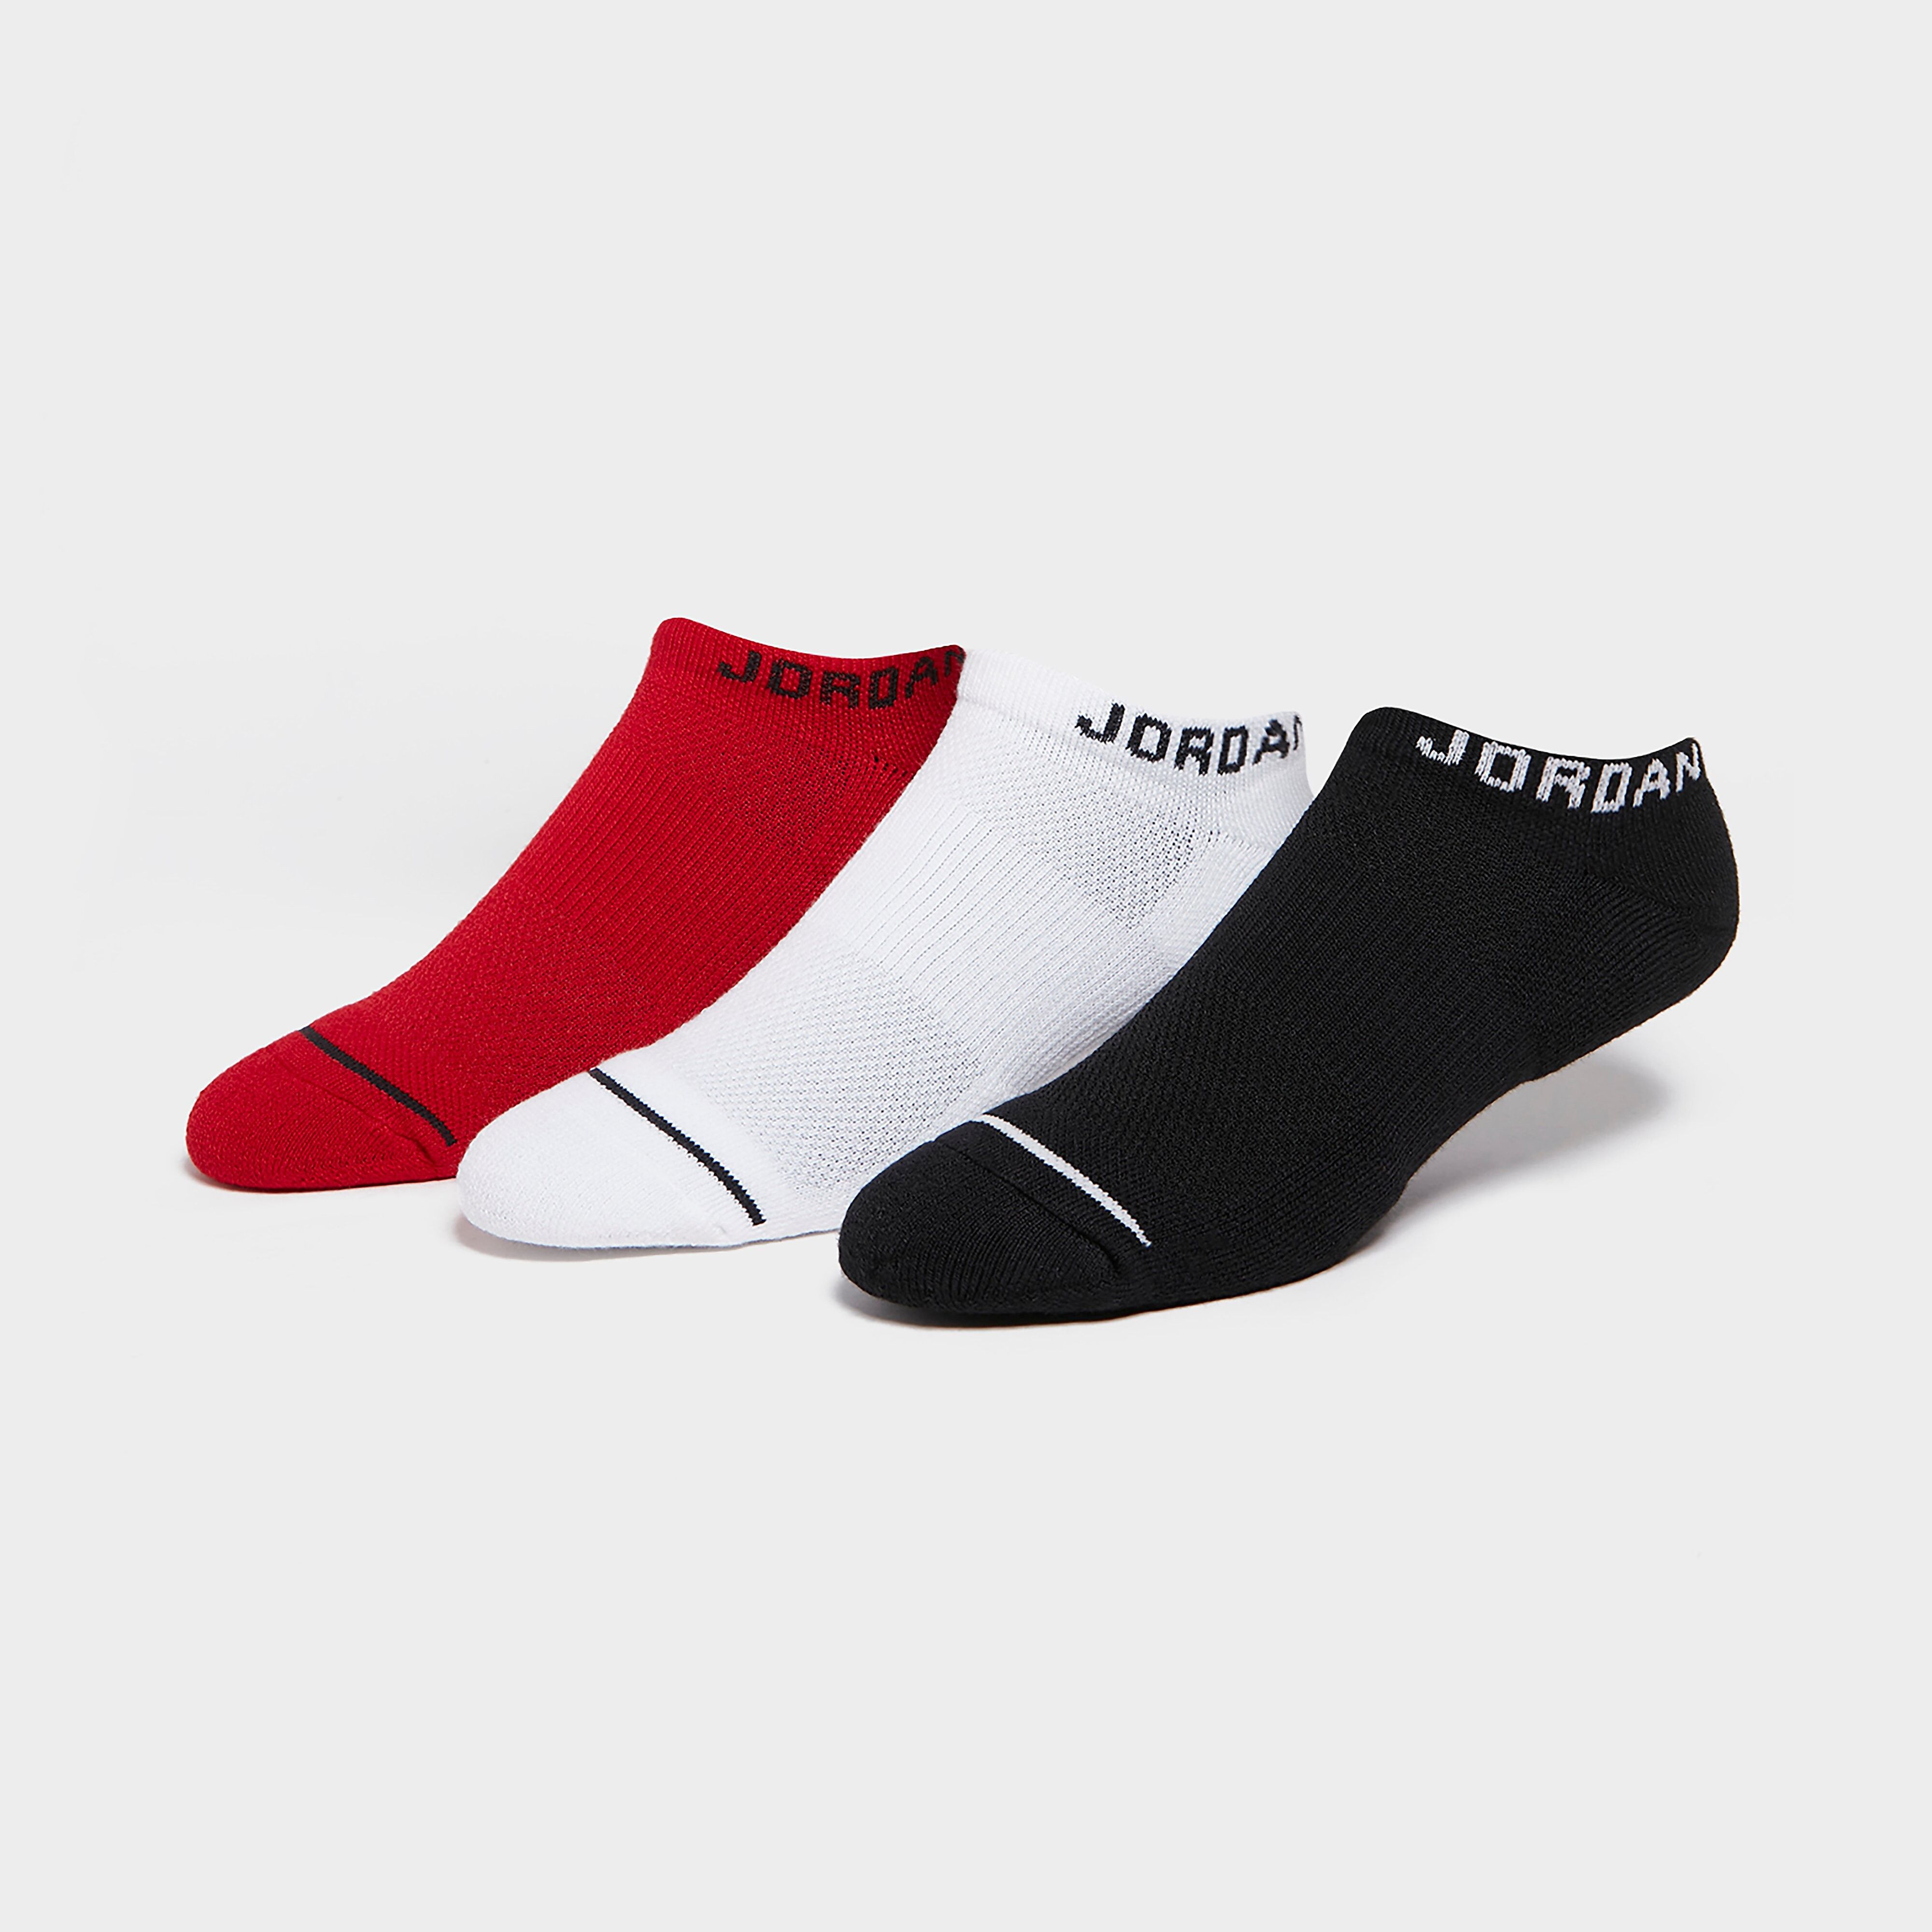 Jordan 3 Pack Dri-fit No-show Socks - Black/White/Red  size: L